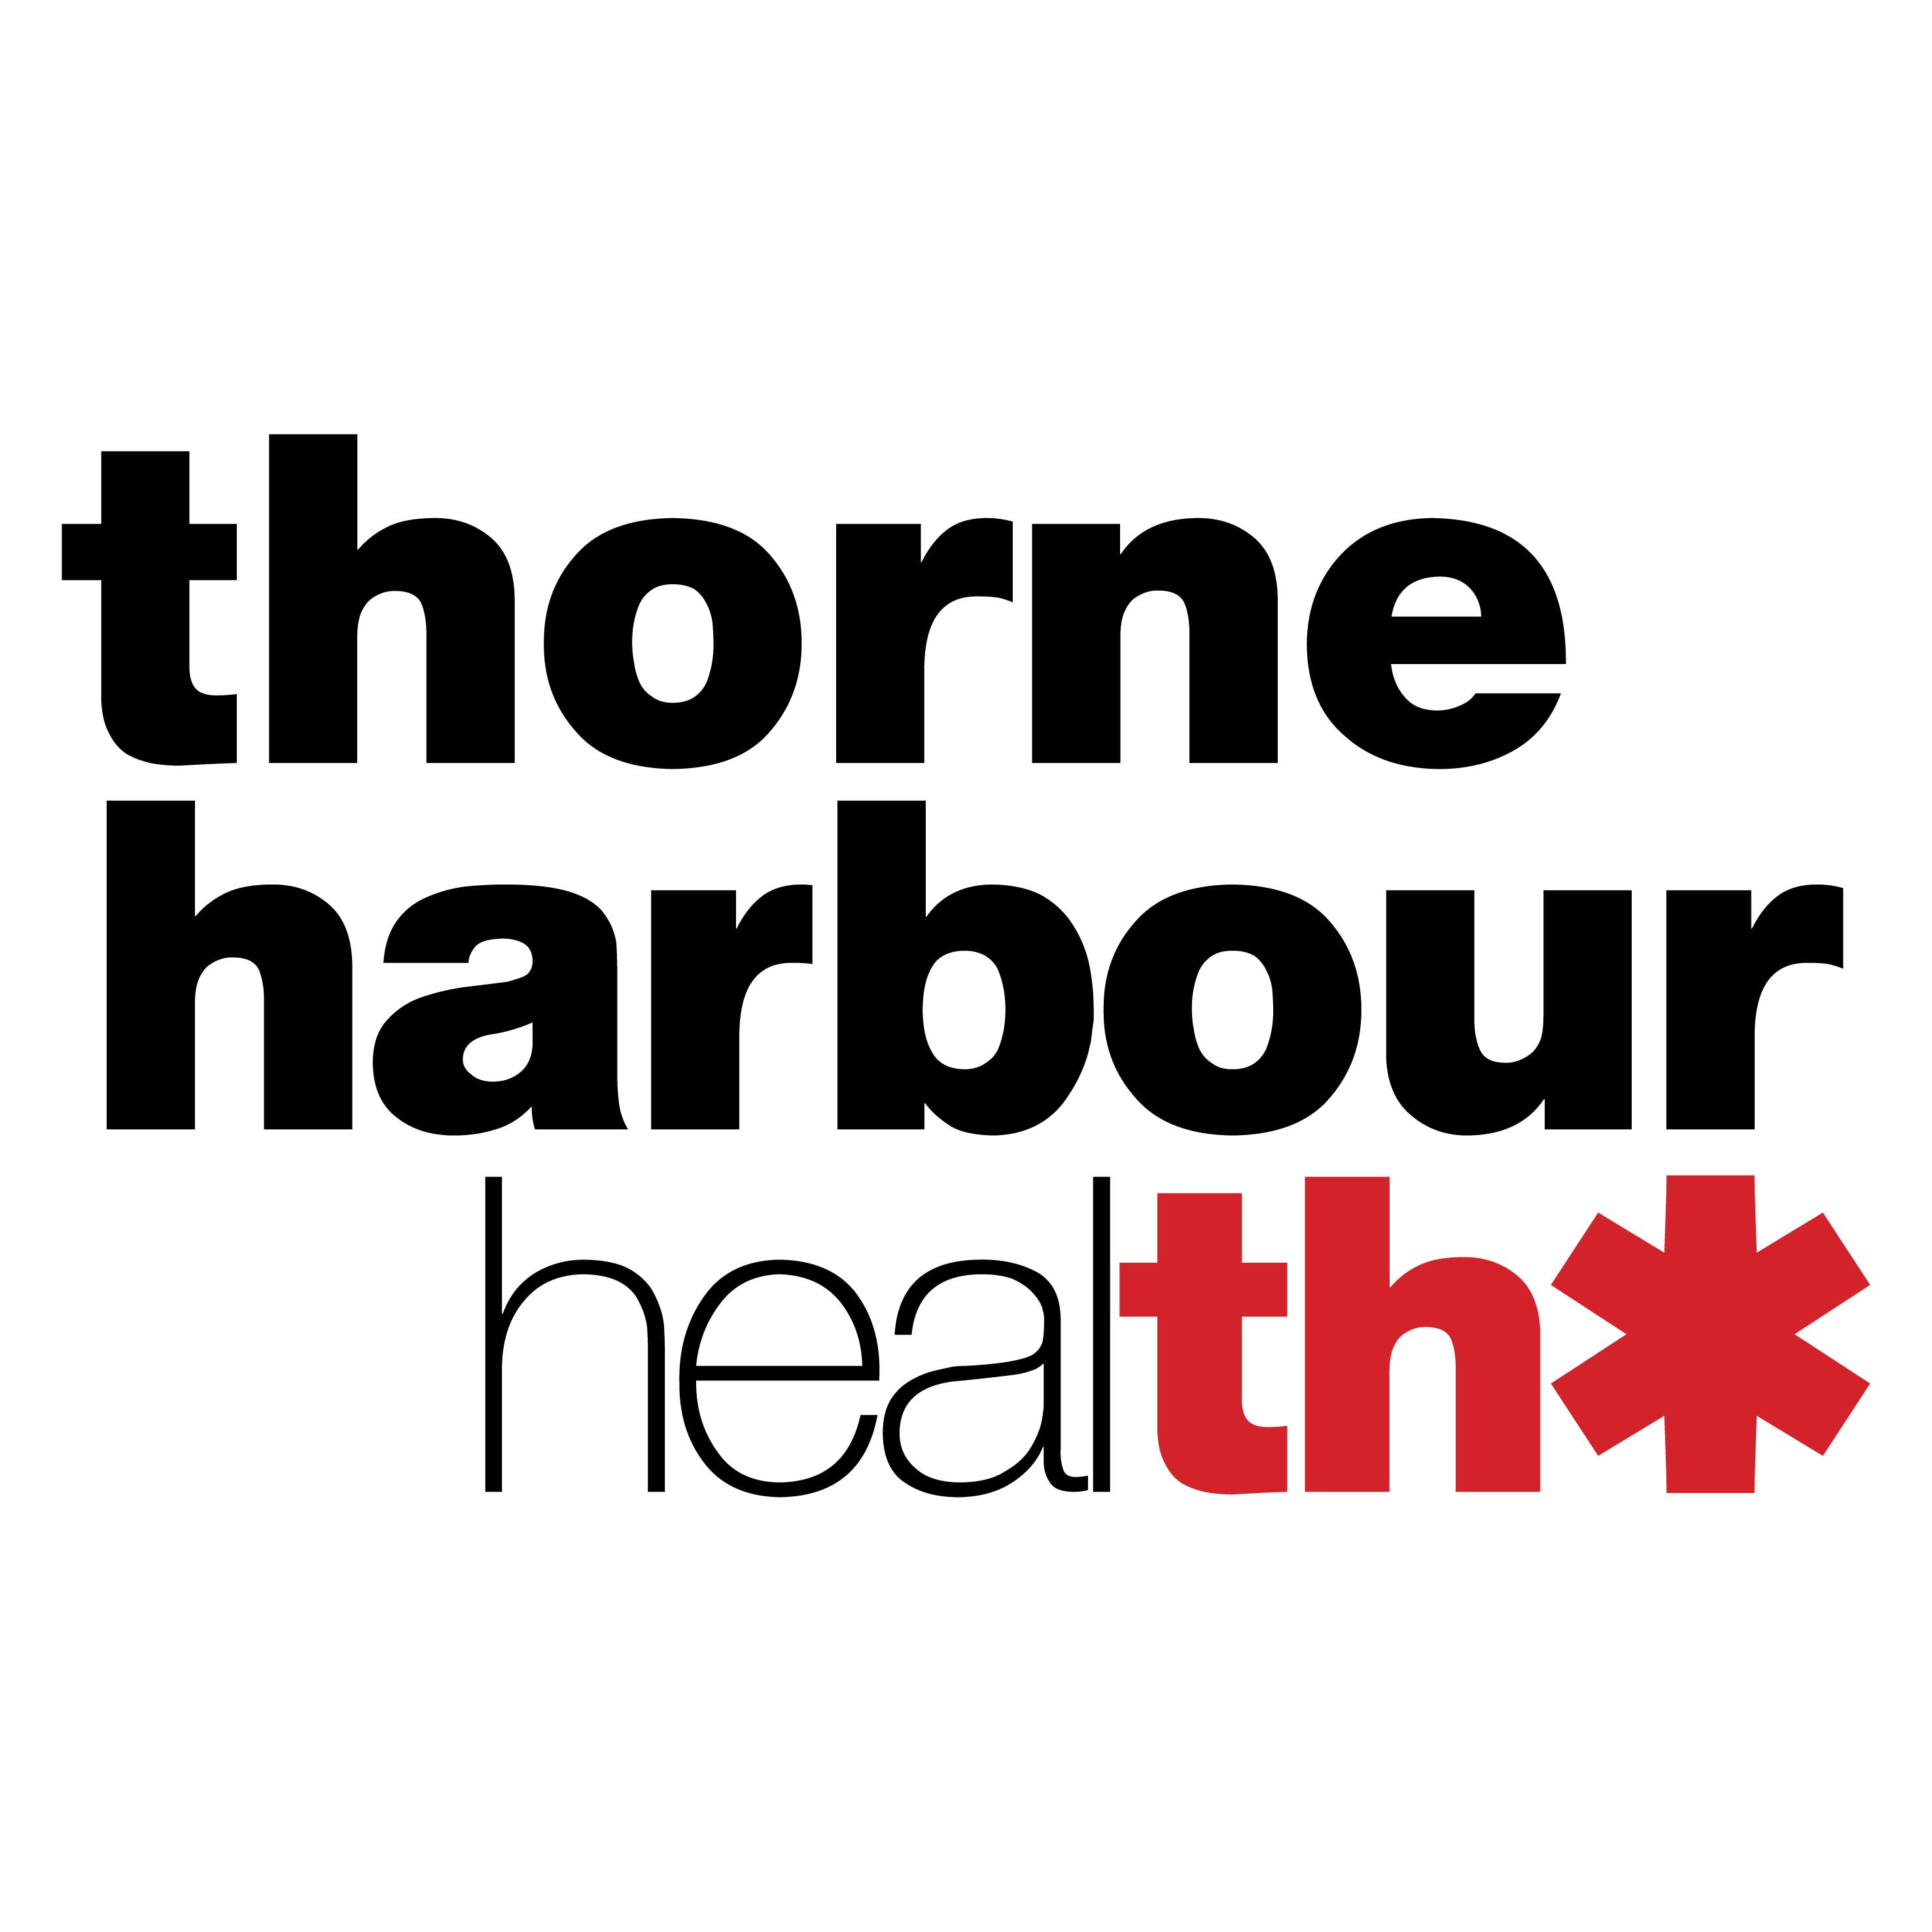 Thorne Harbour Health Logo